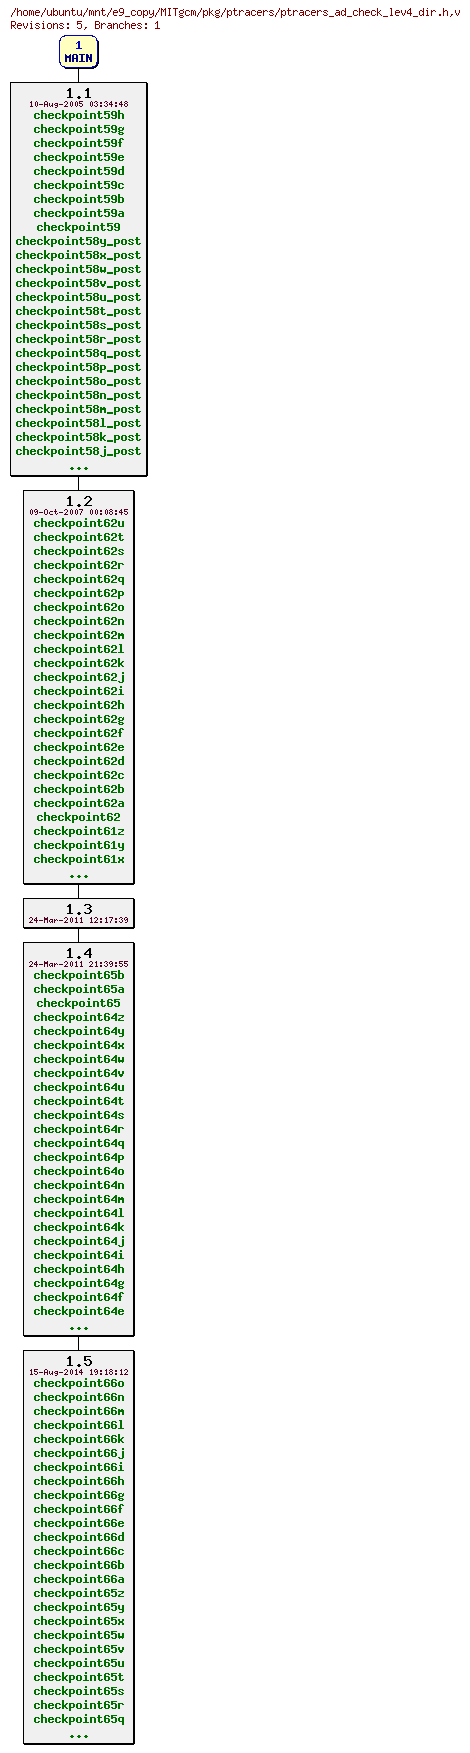 Revisions of MITgcm/pkg/ptracers/ptracers_ad_check_lev4_dir.h